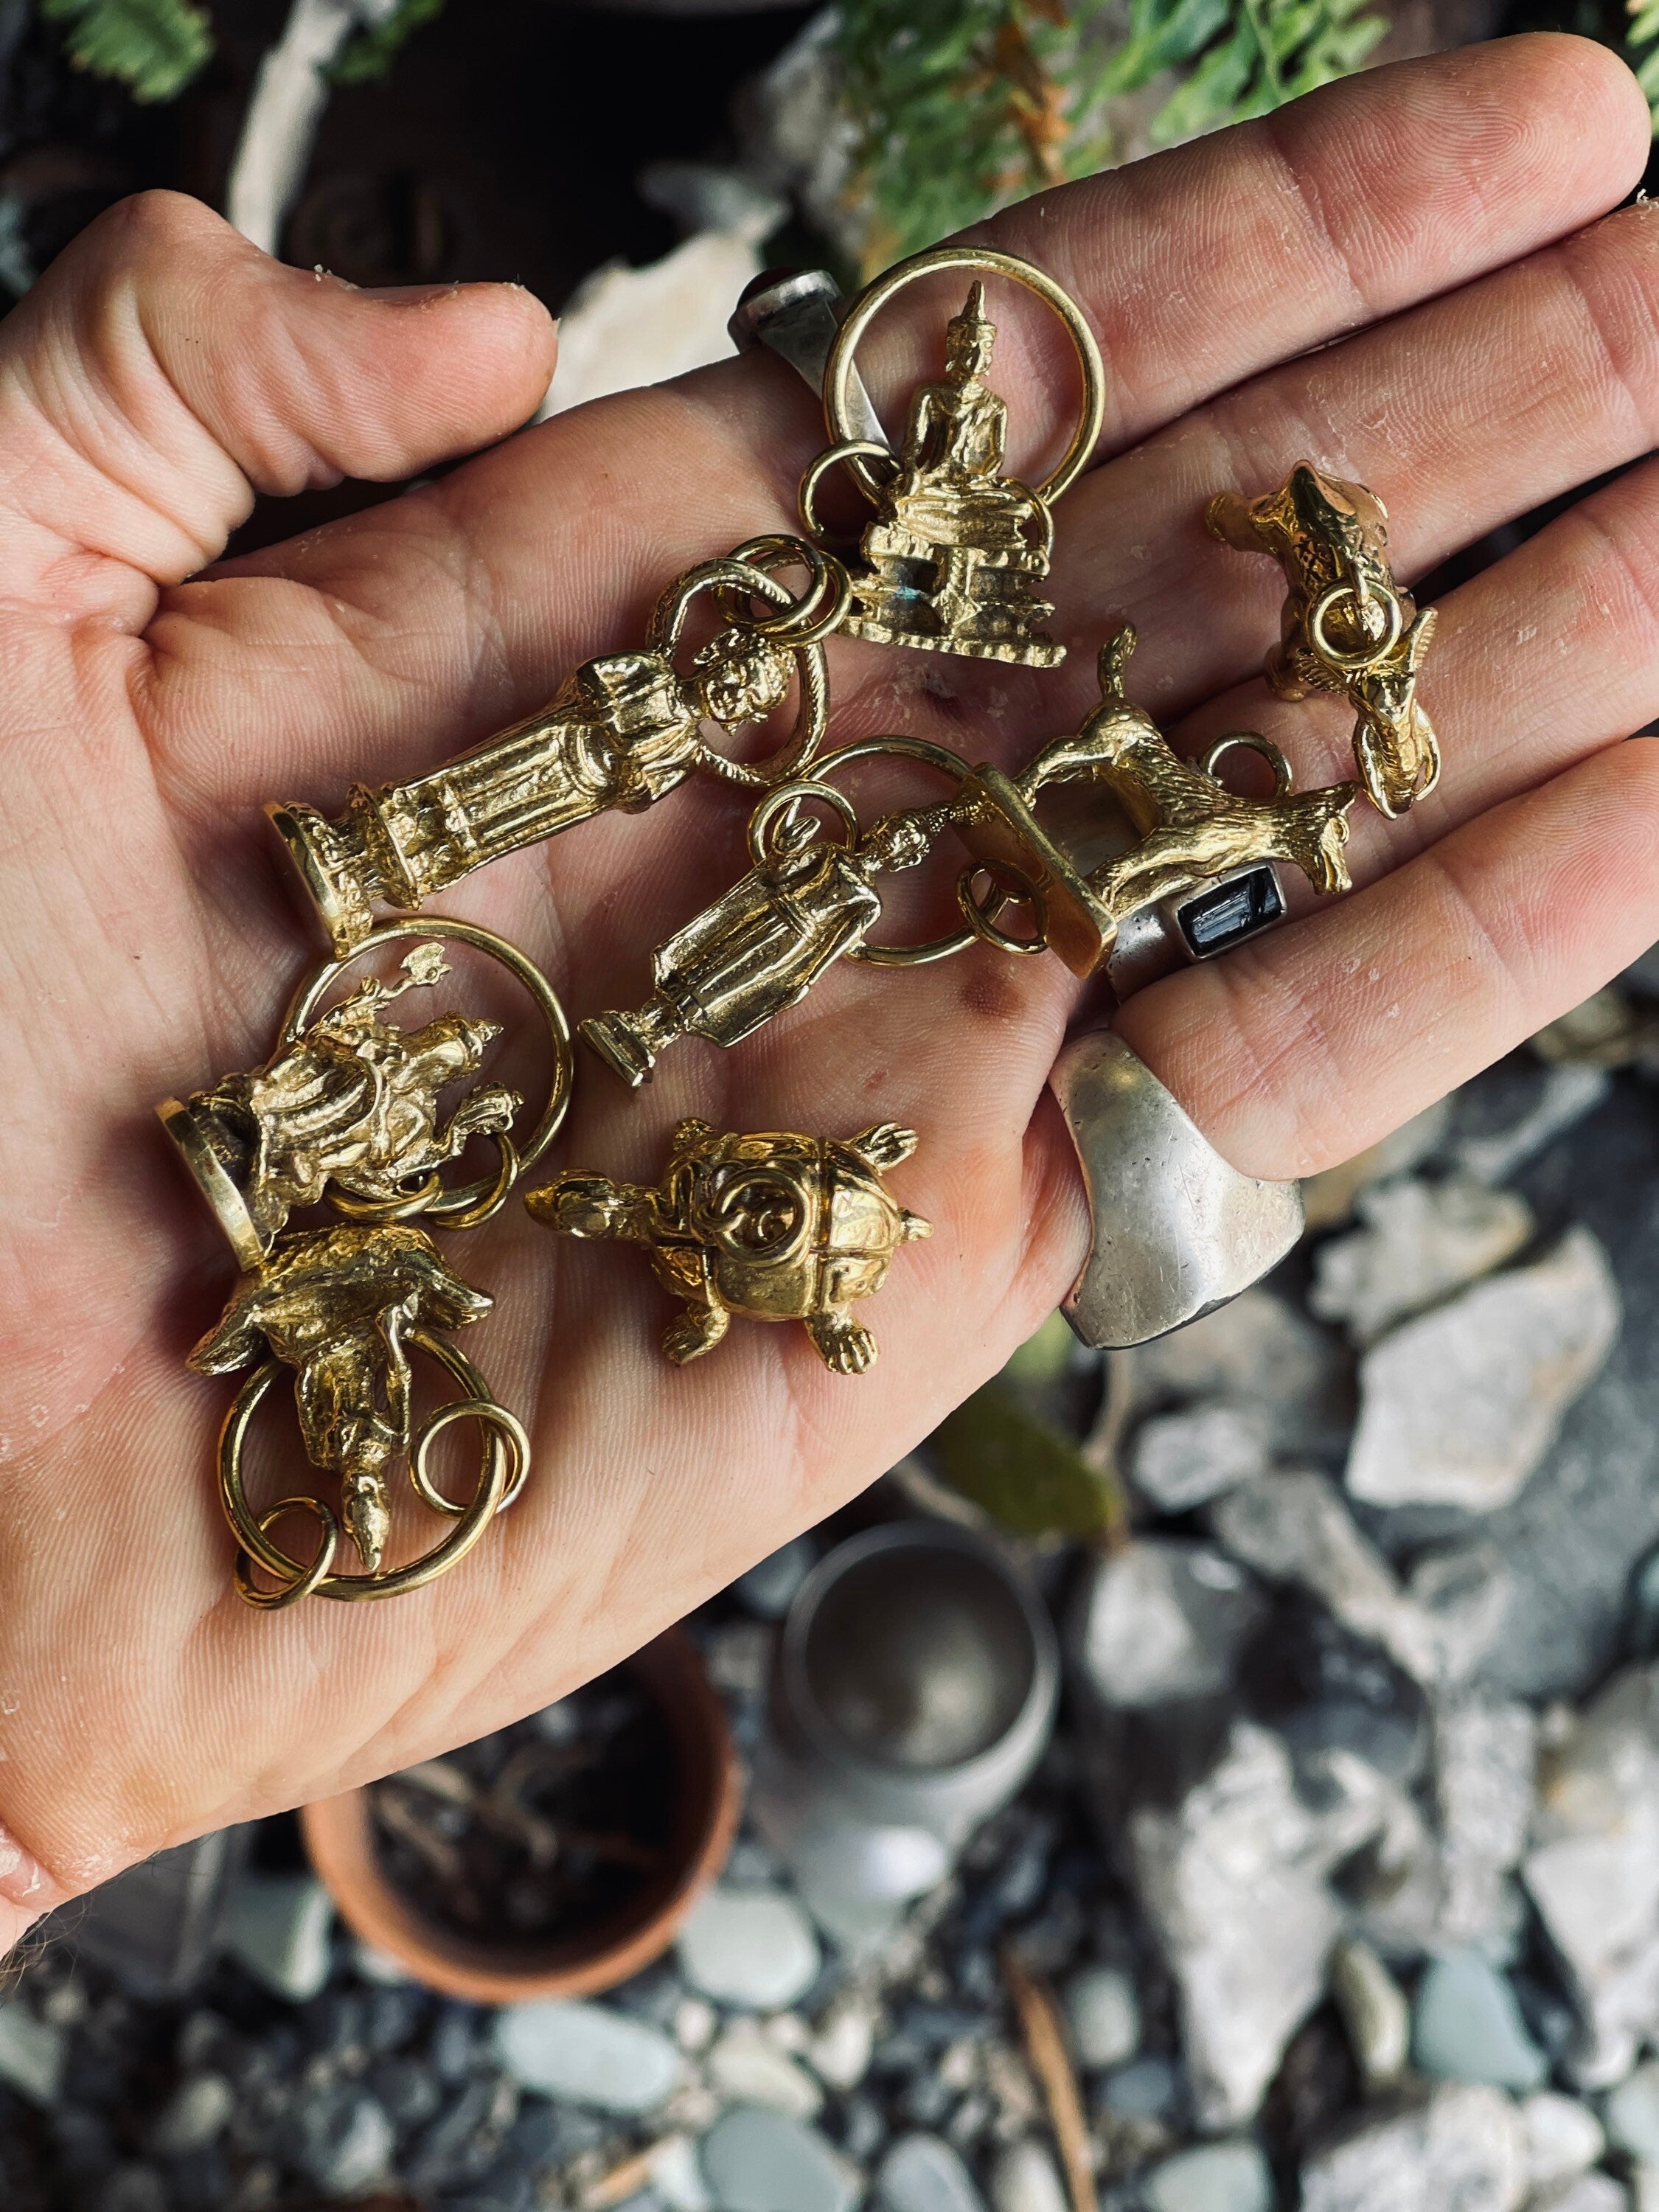 Buddhist Elephant Amulet - Brass Cast - Pendant Necklace